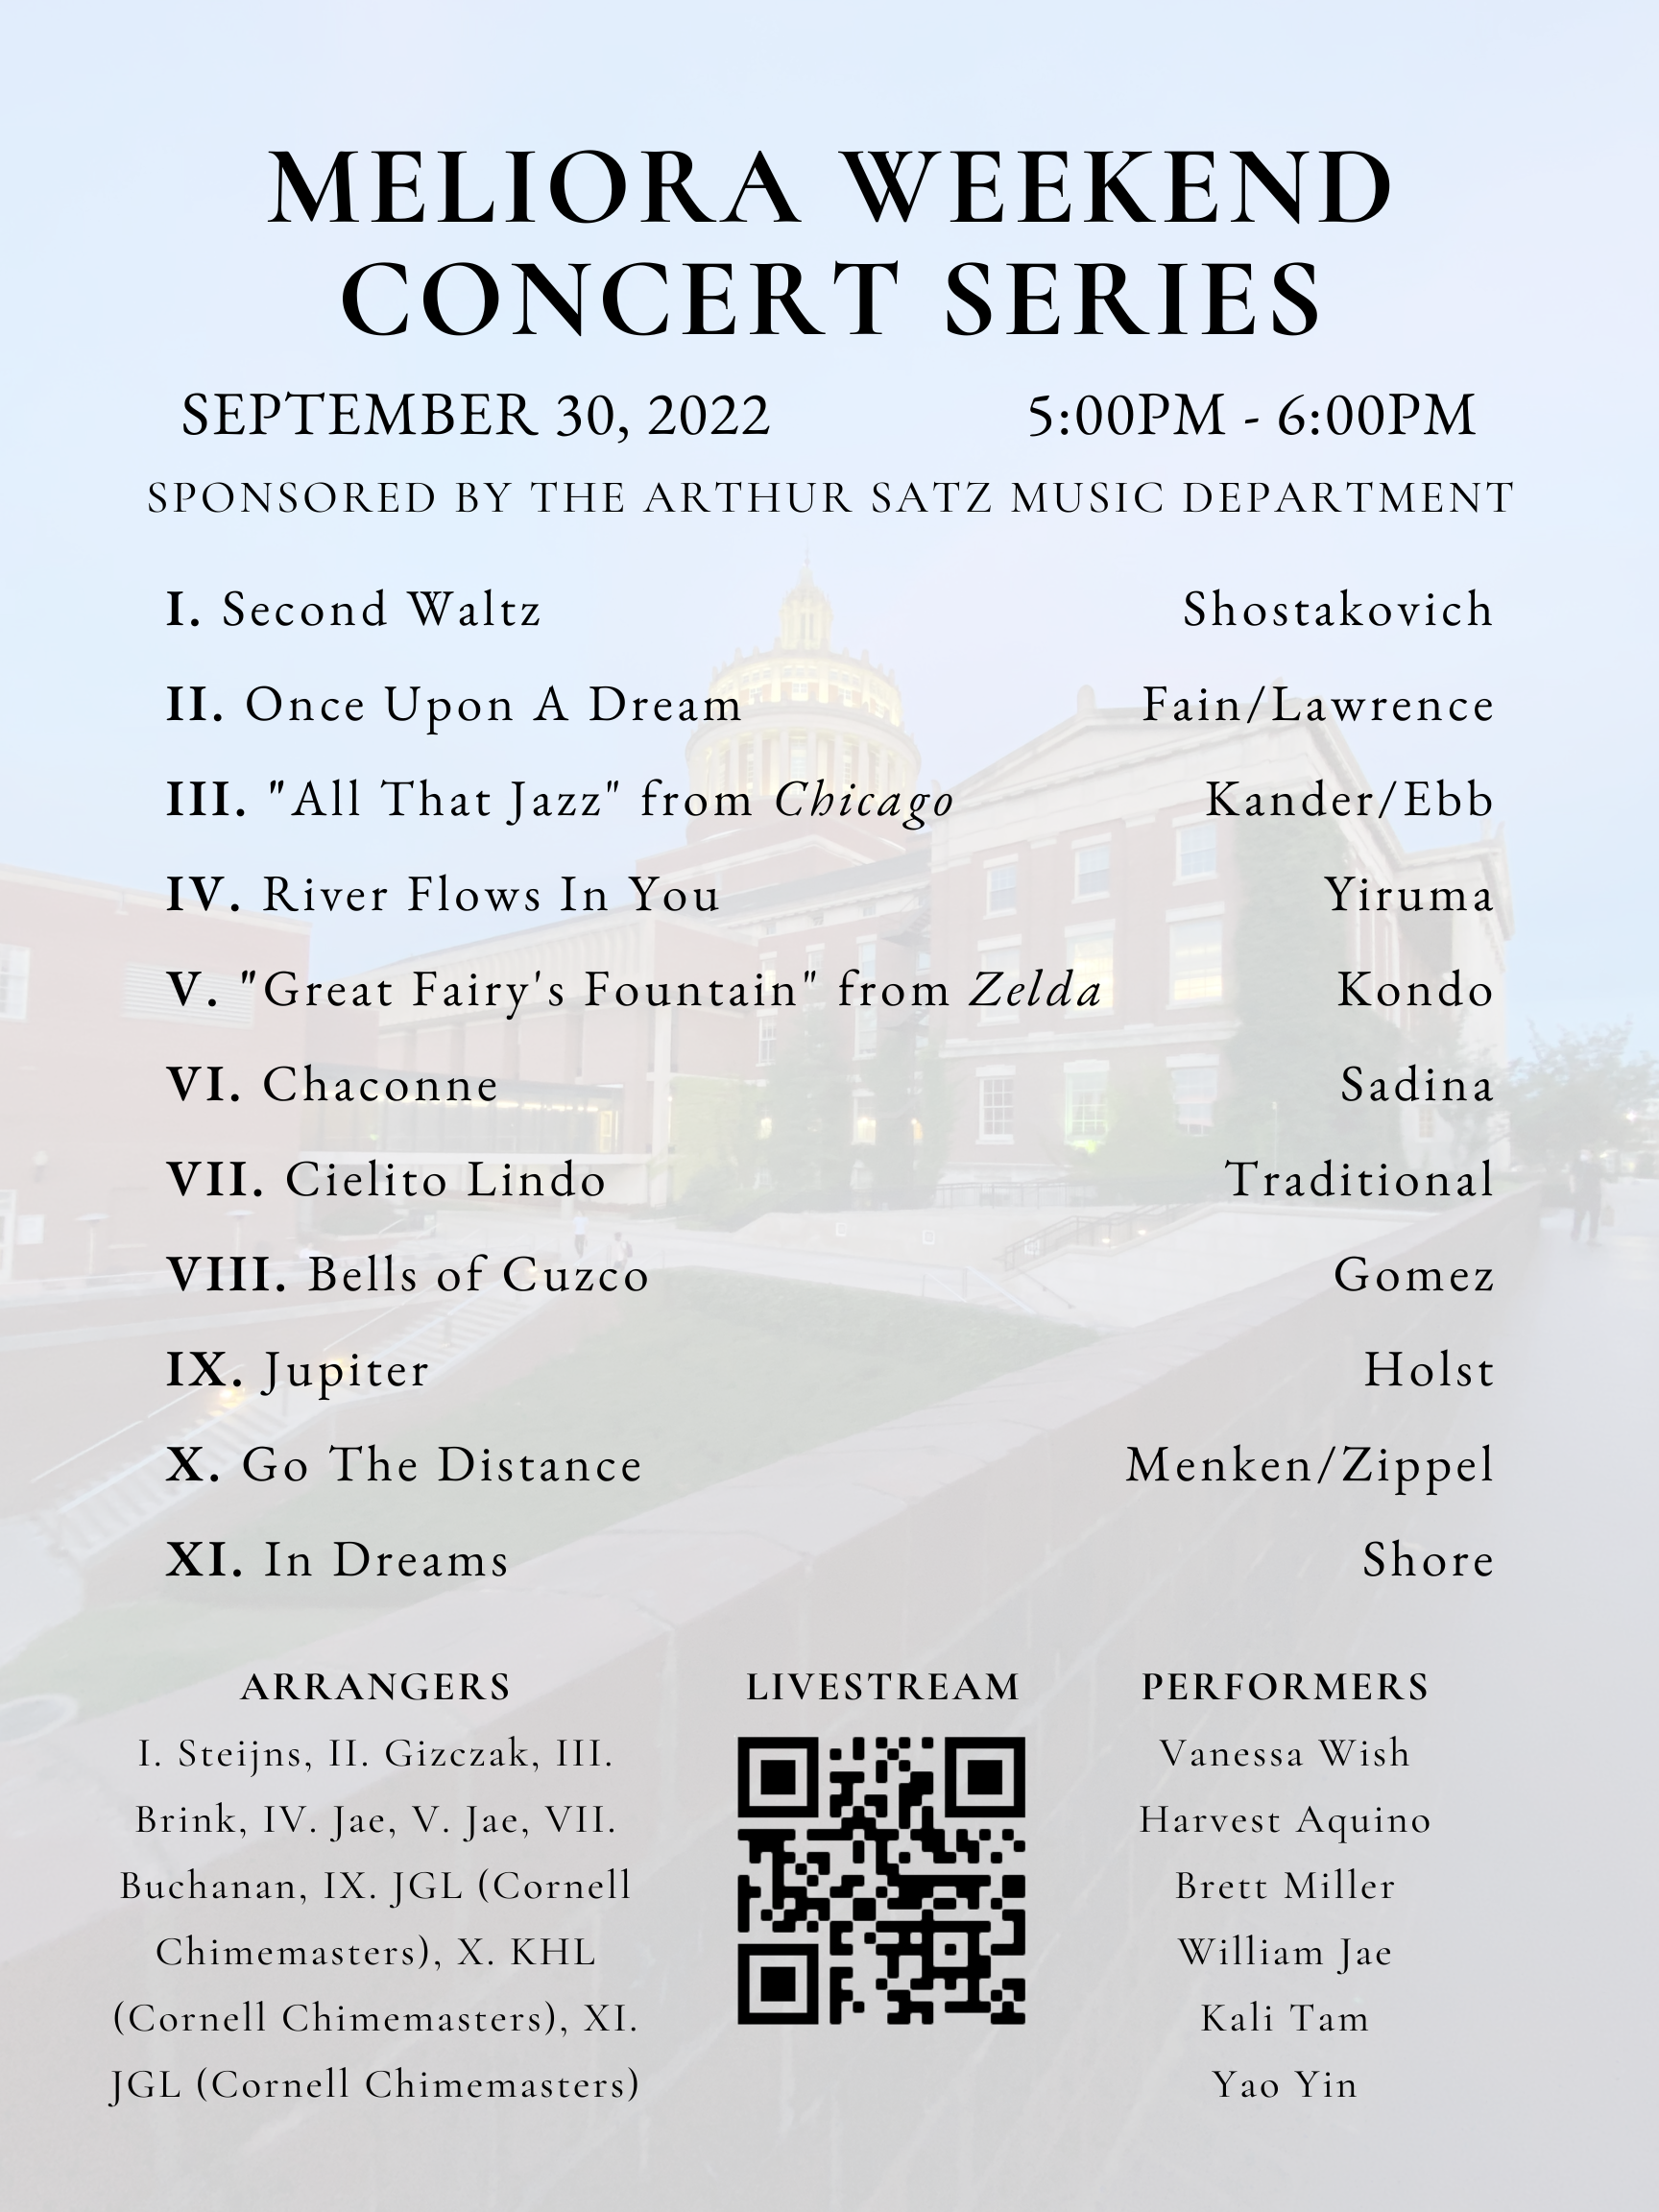 Concert Schedule Hopeman Memorial Carillon Arthur Satz Department of Music University of Rochester